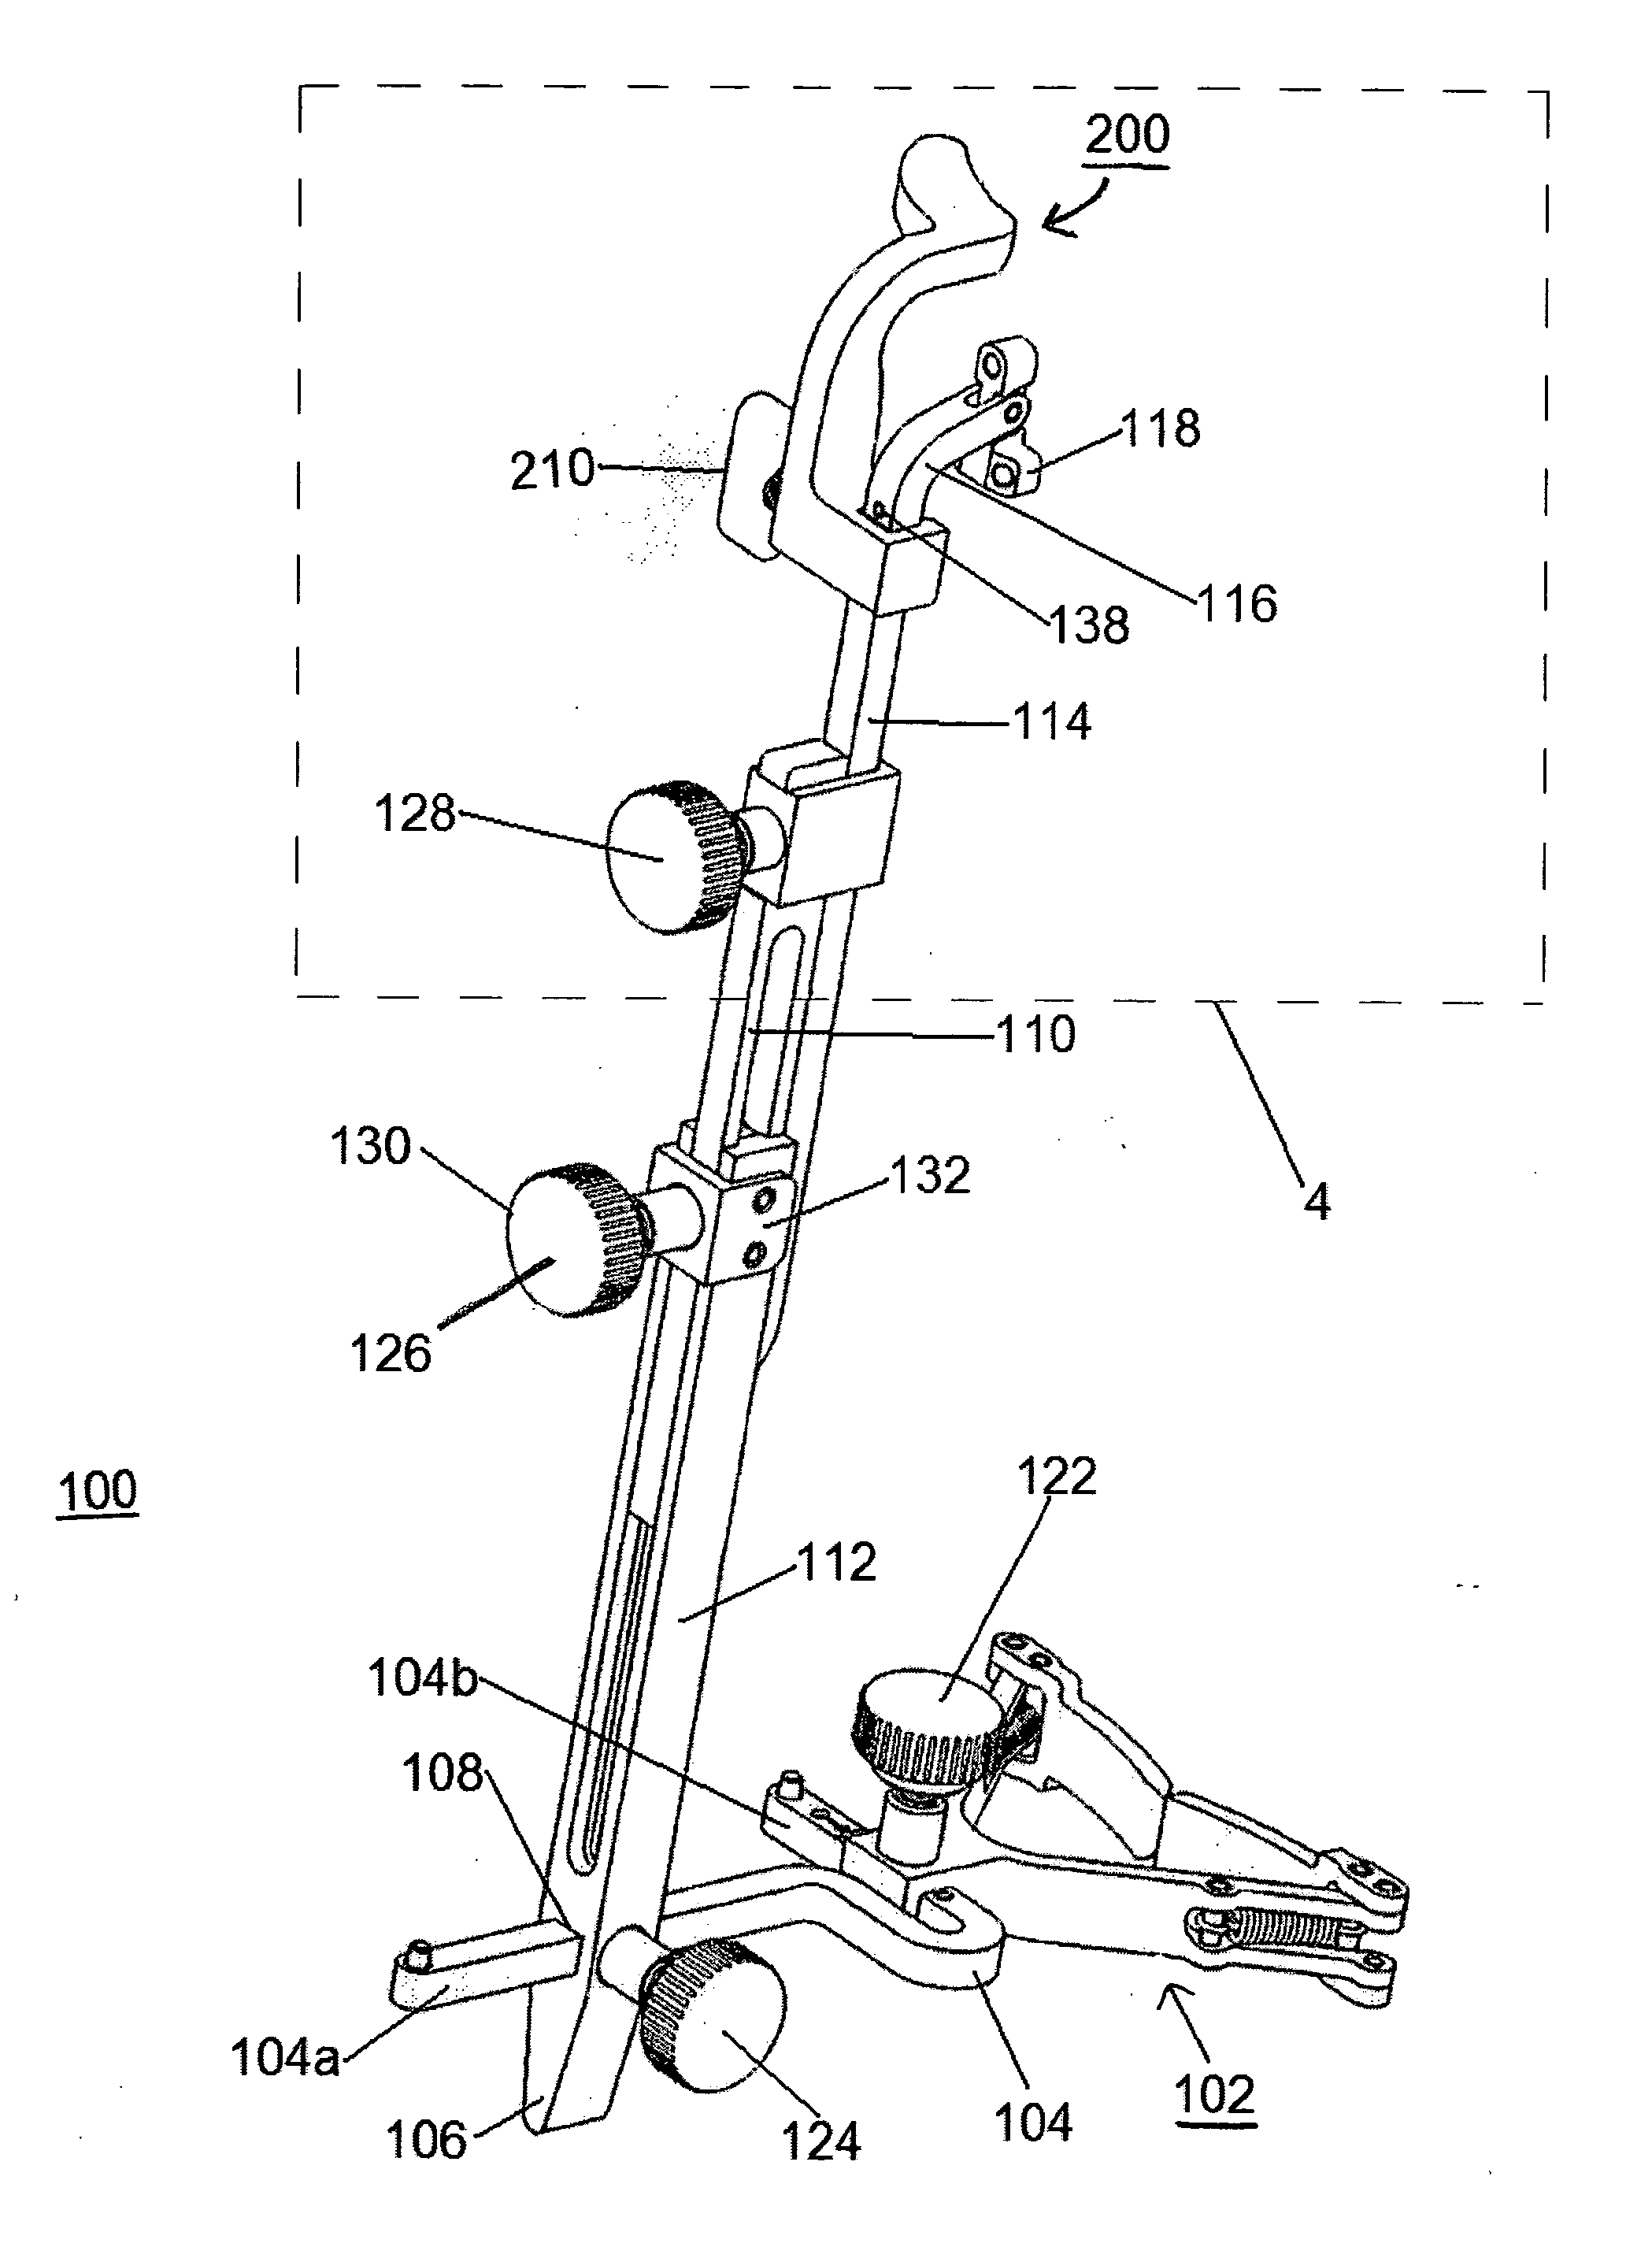 Unicondylar Knee Instrument System